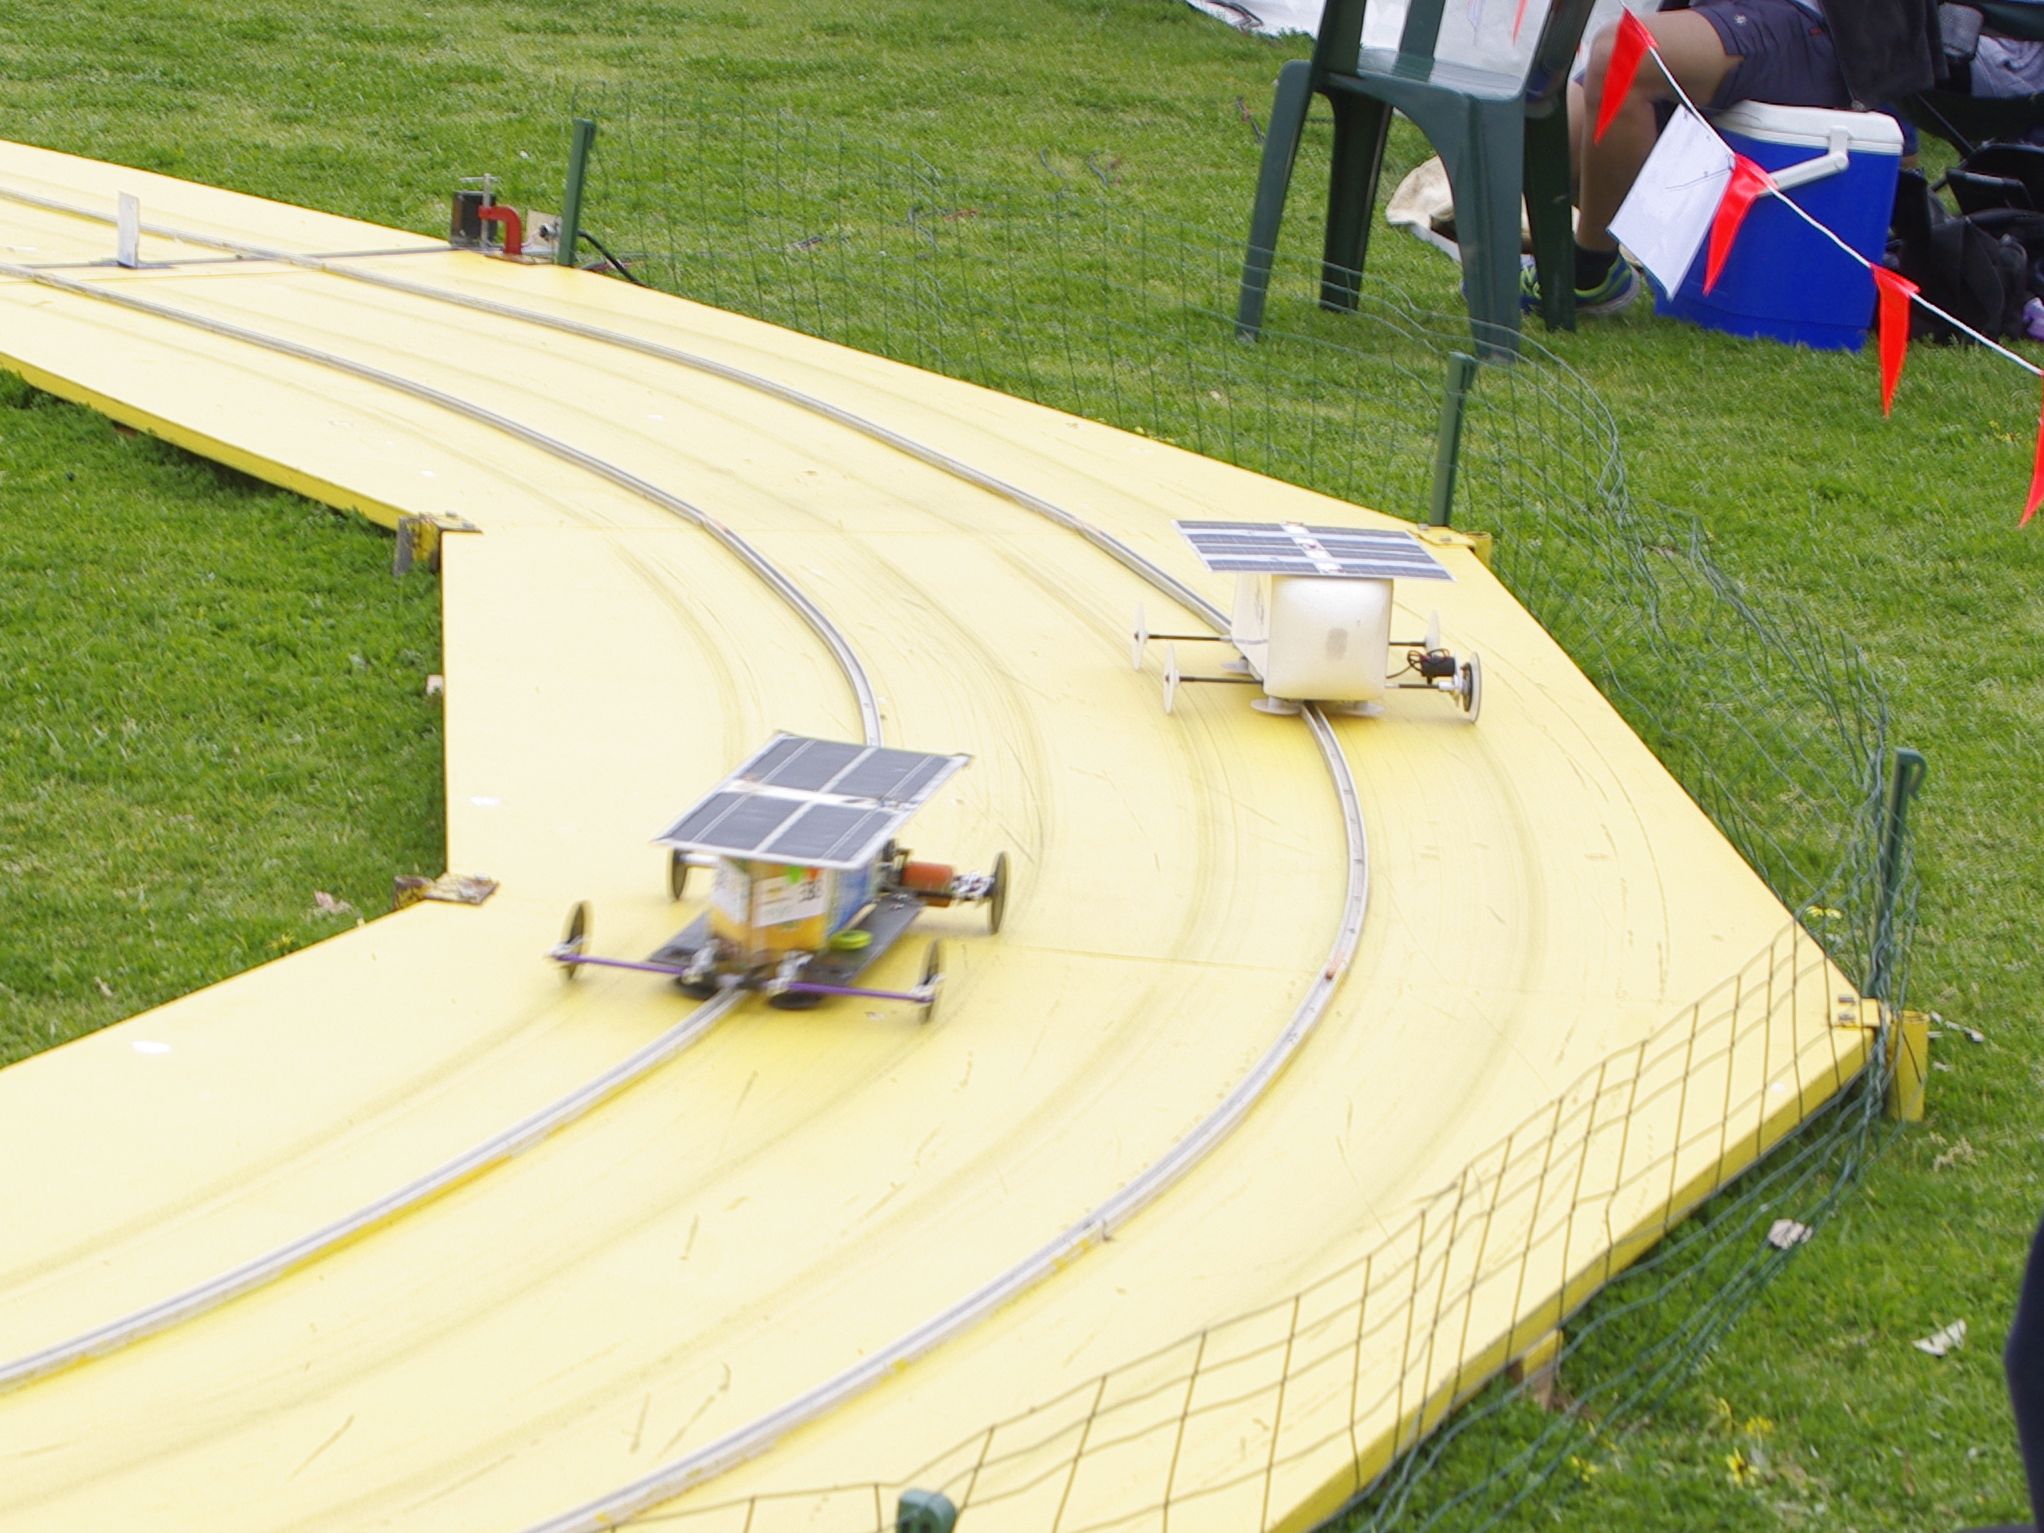 Thumbnail for Model solar car racing